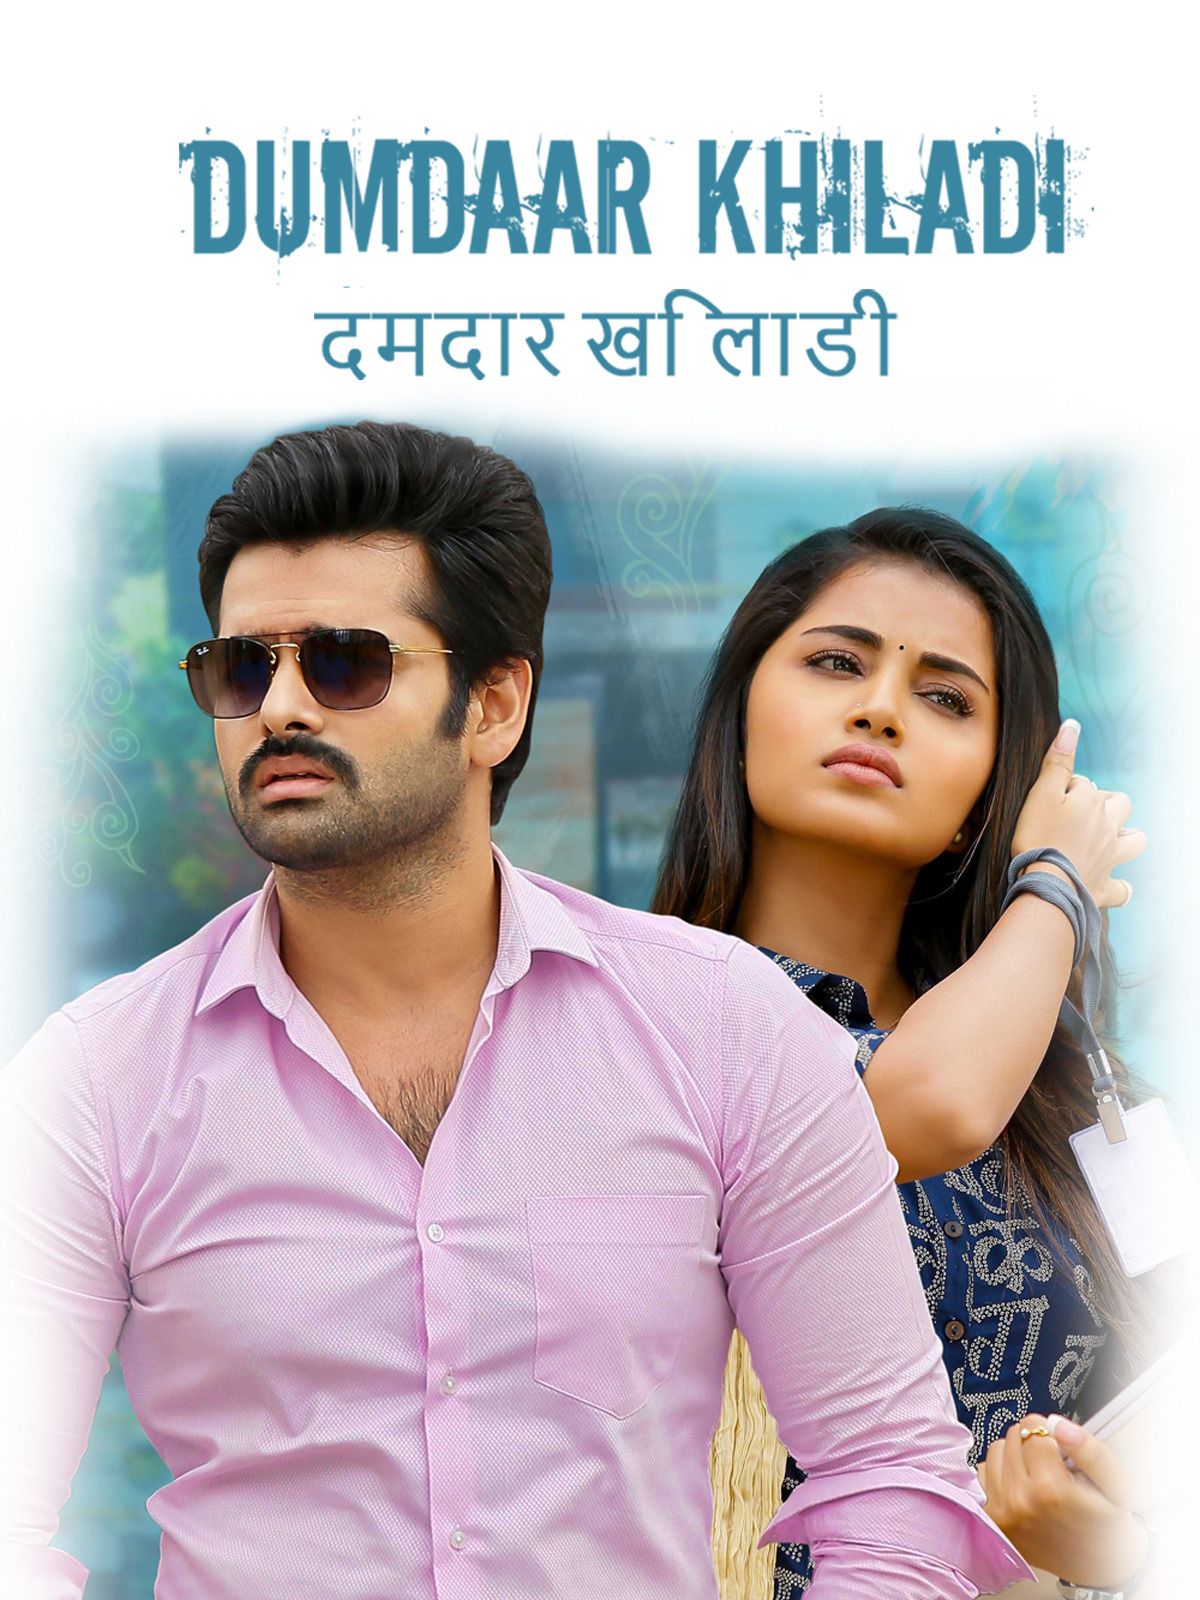 Damdaar Khiladi (2018) Hindi Dubbed download full movie